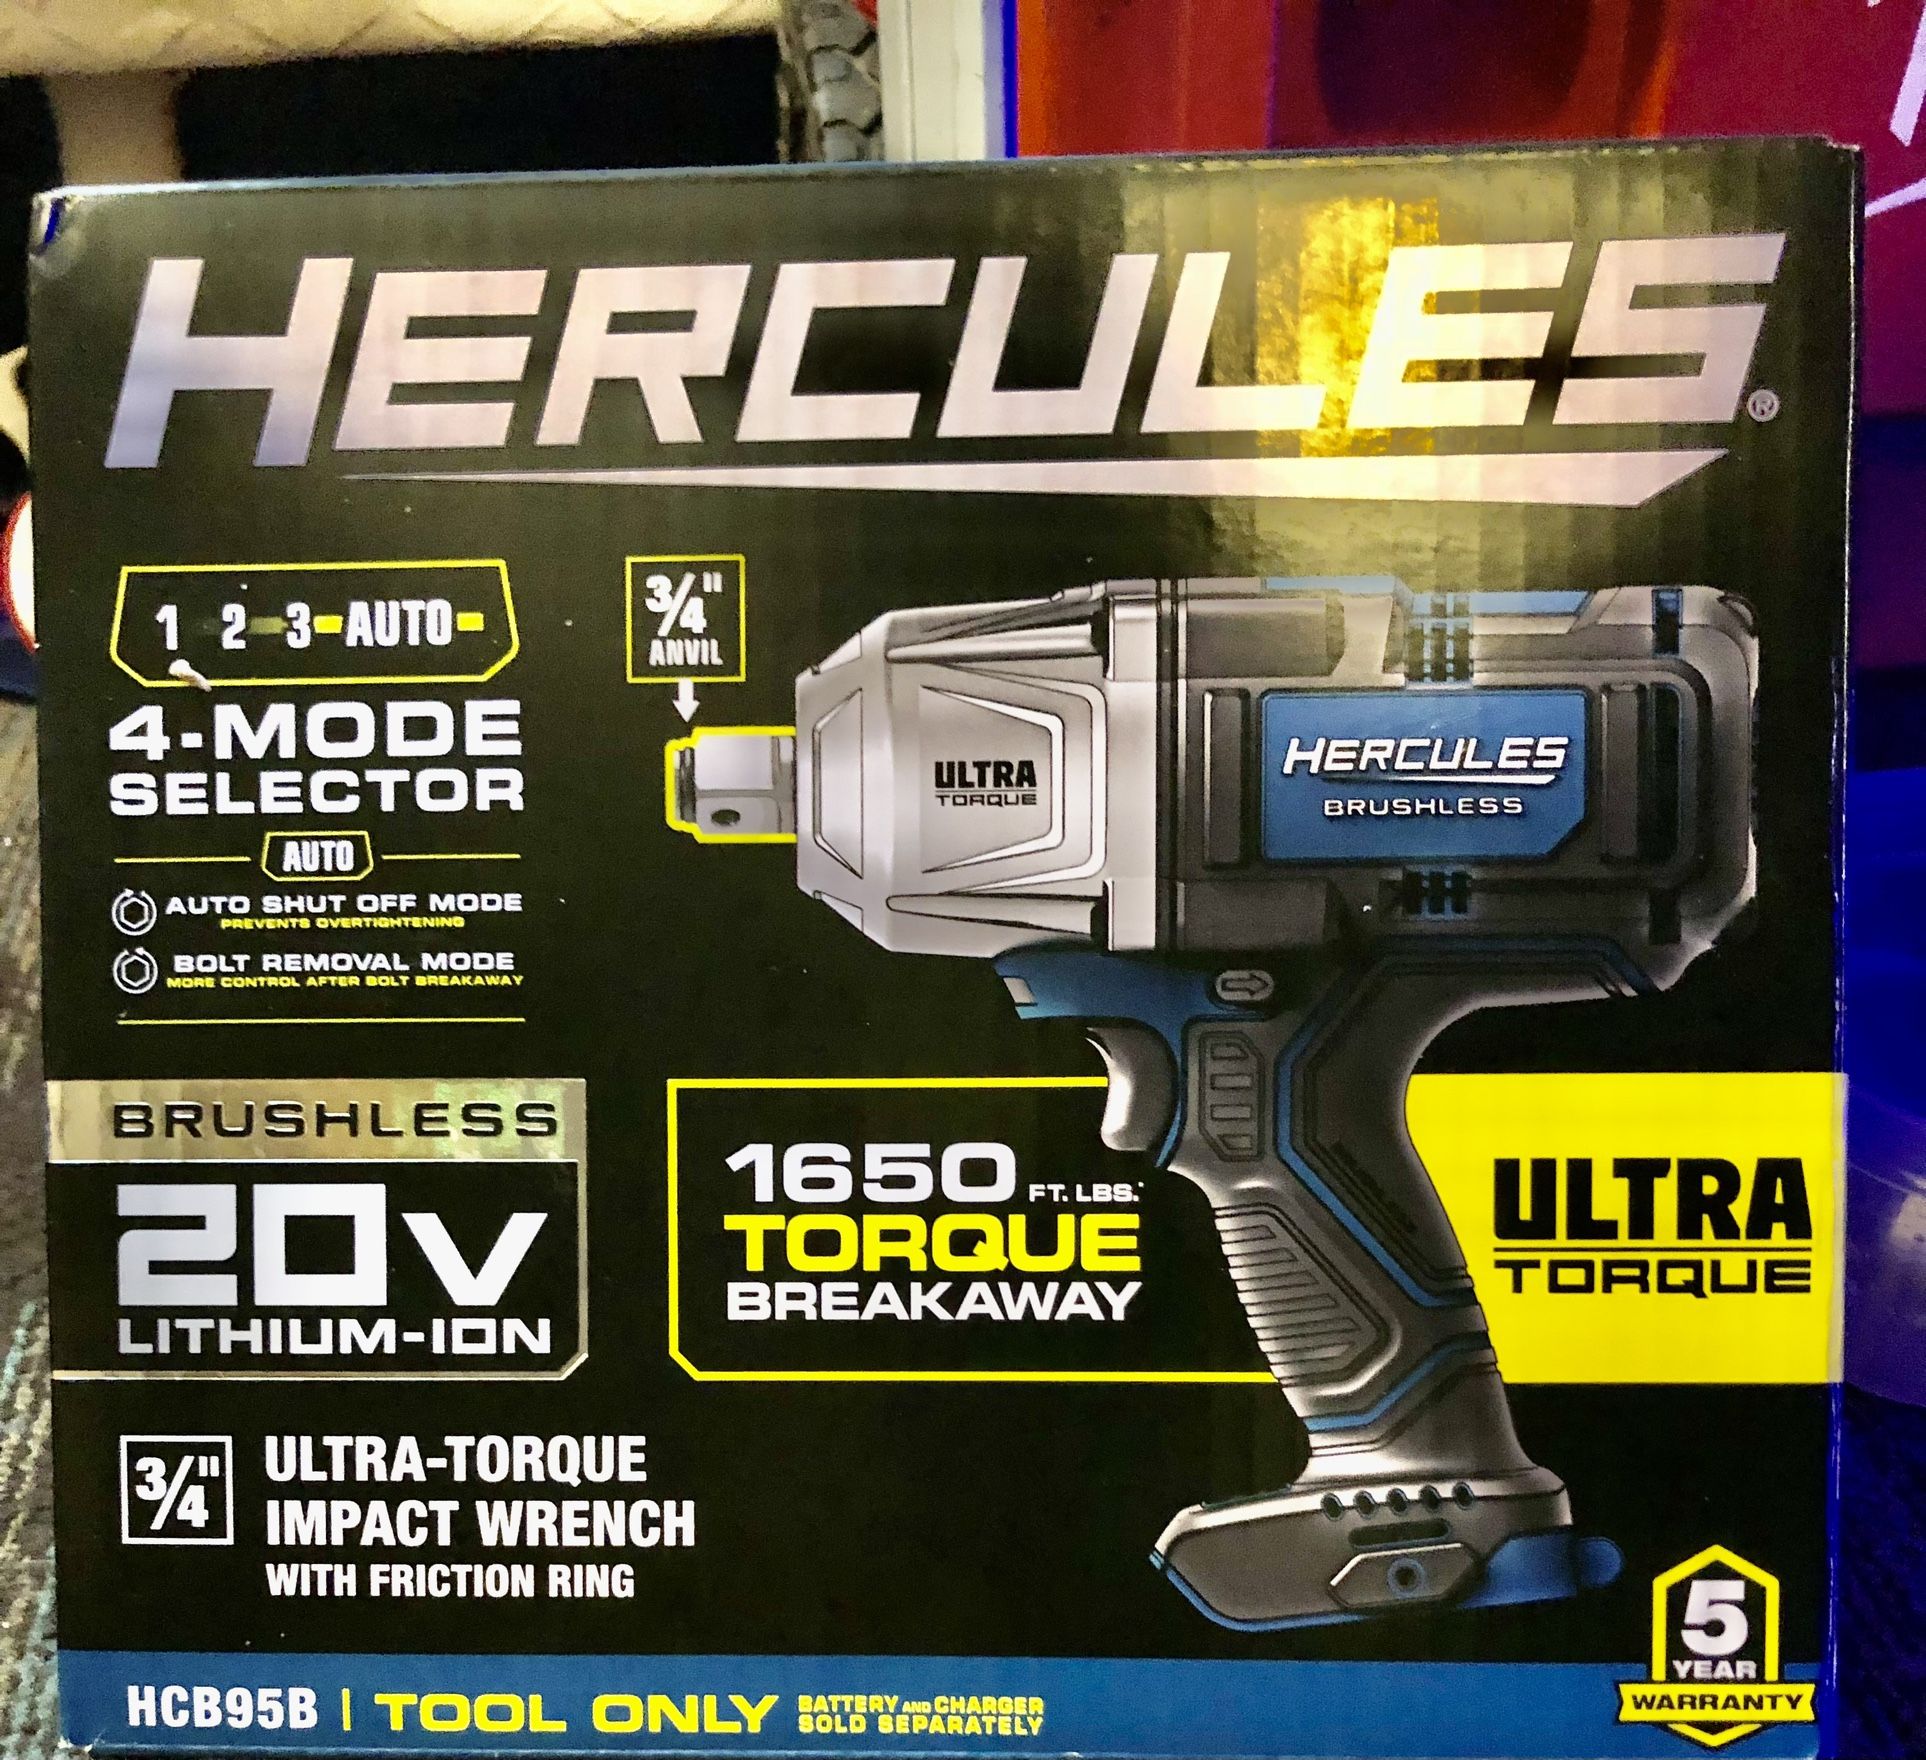 Hercules 20v 1650 3/4” ultra torque impact wrench